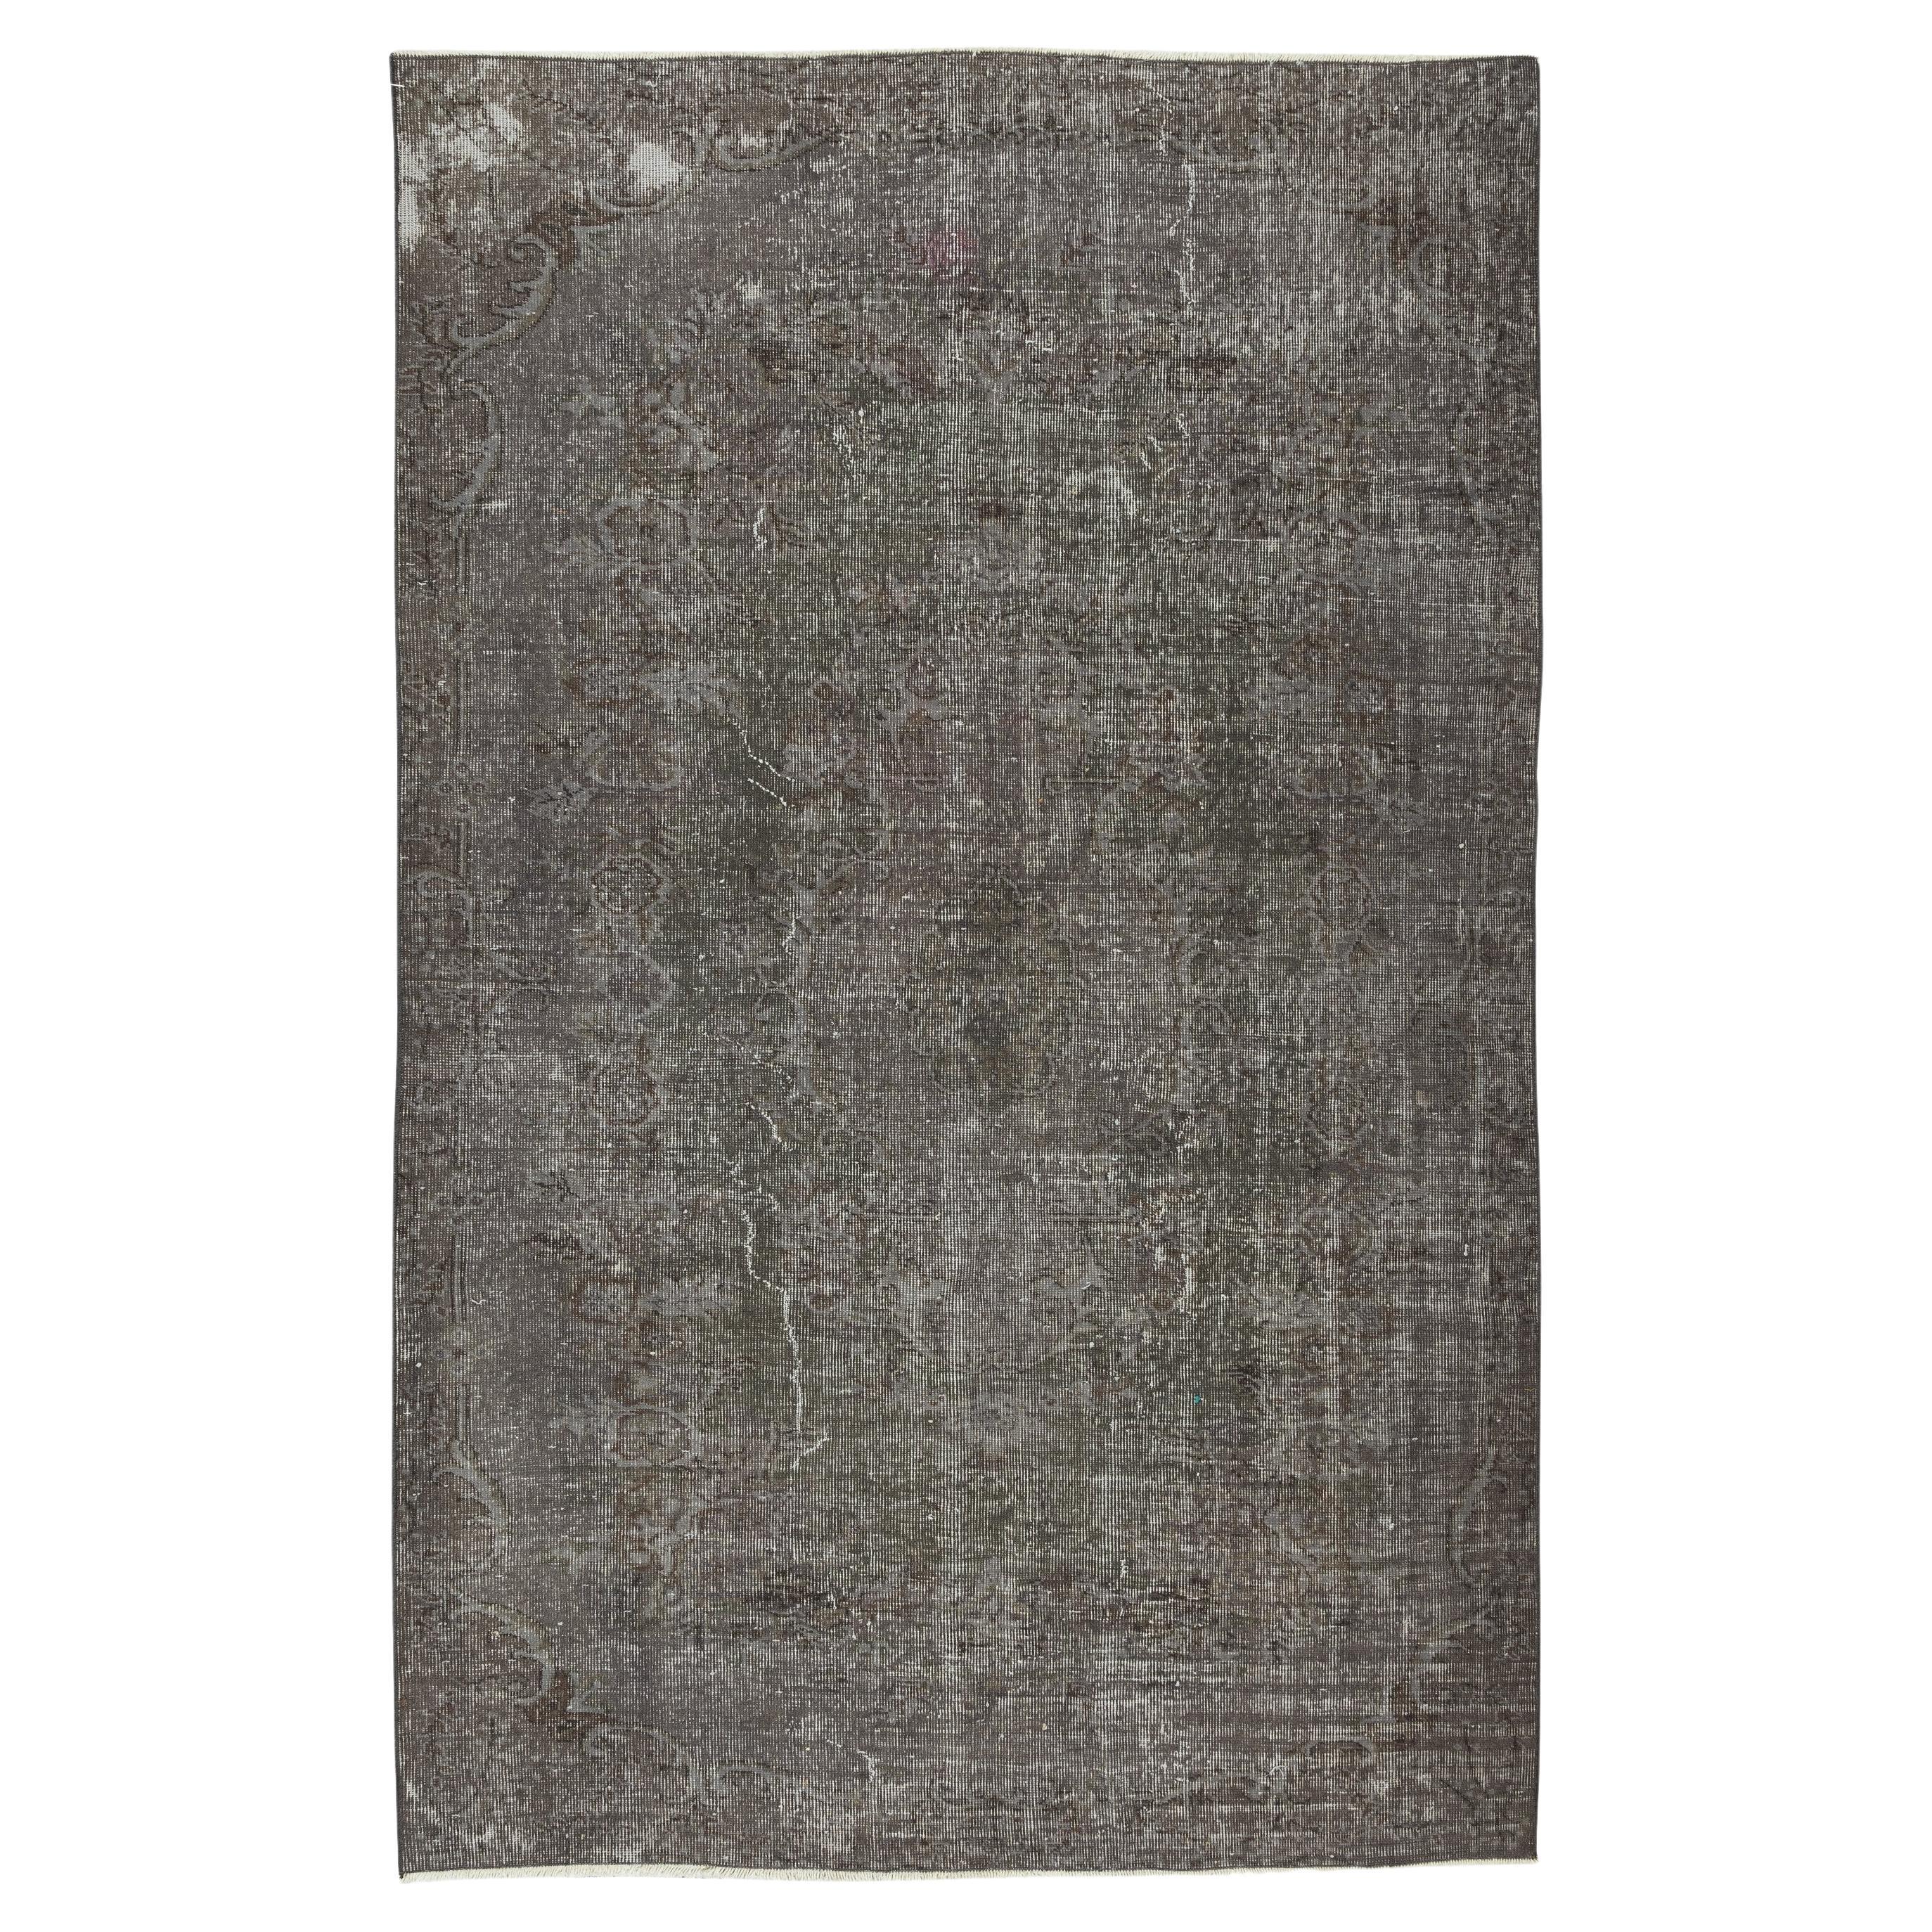 Gray Area Rug for Modern Interior, Handmade in Turkey, Vintage Carpet